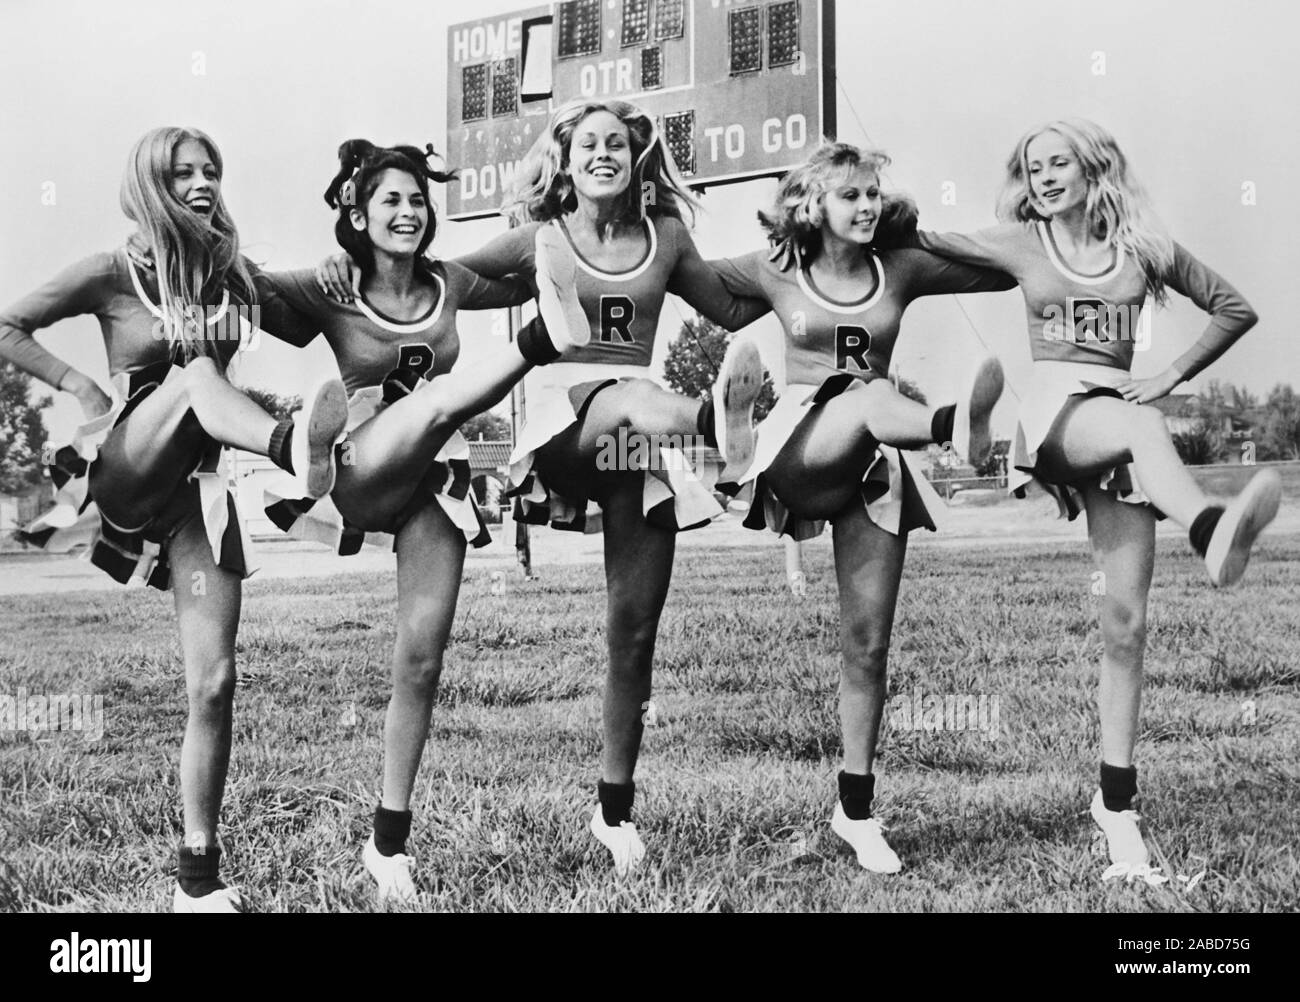 THE POM POM GIRLS, from left: Susan Player, Jennifer Ashley, Lisa Reeves, Diane  Lee Hart, Cheryl Smith, 1976 Stock Photo - Alamy